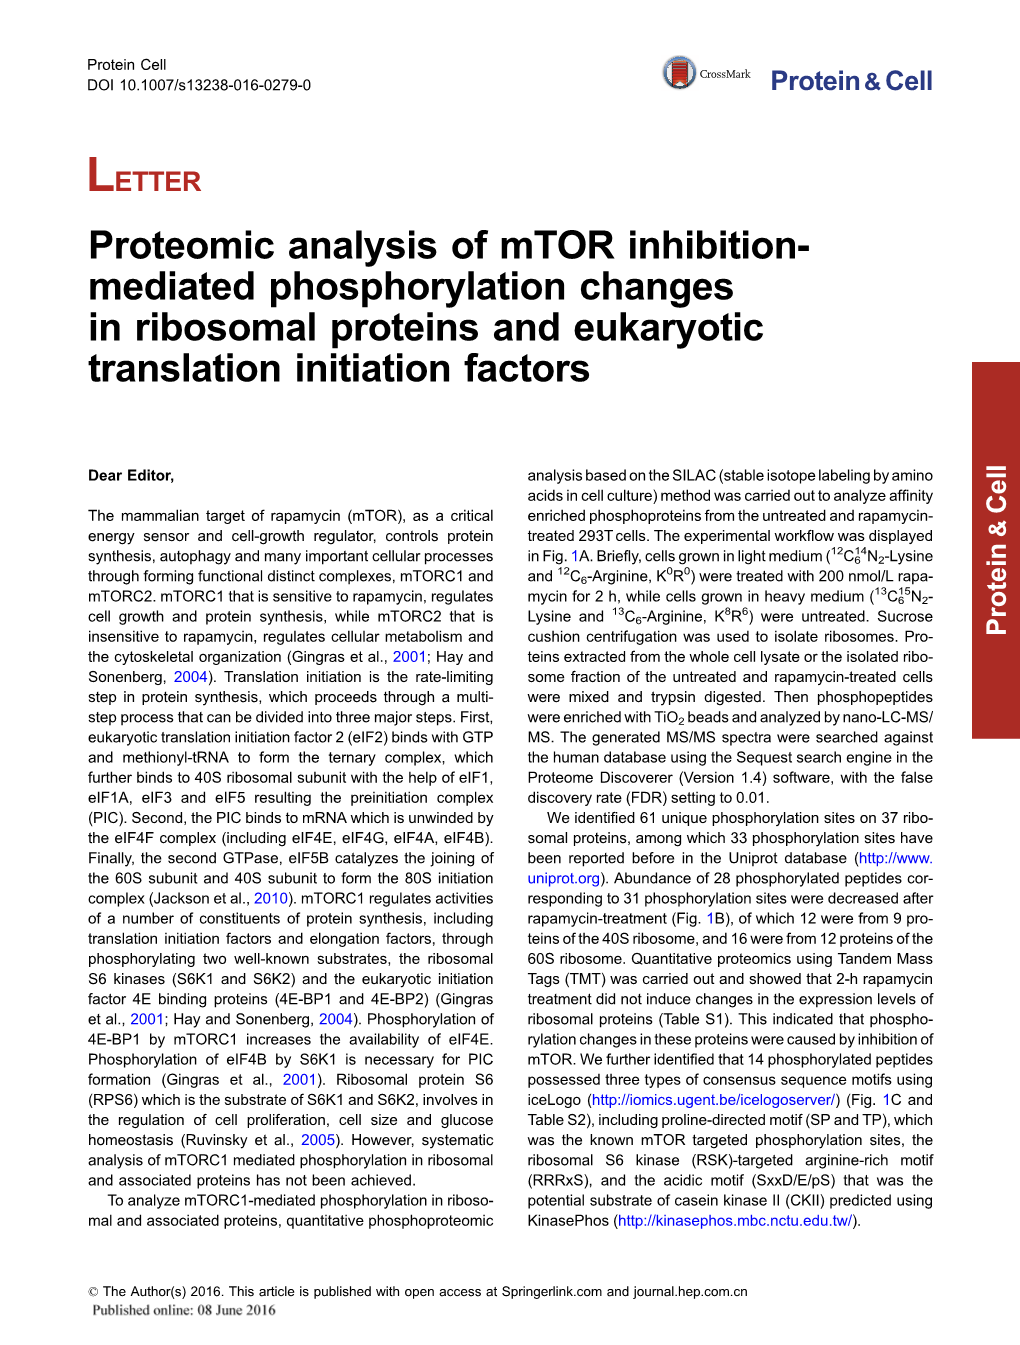 Proteomic Analysis of Mtor Inhibition-Mediated Phosphorylation